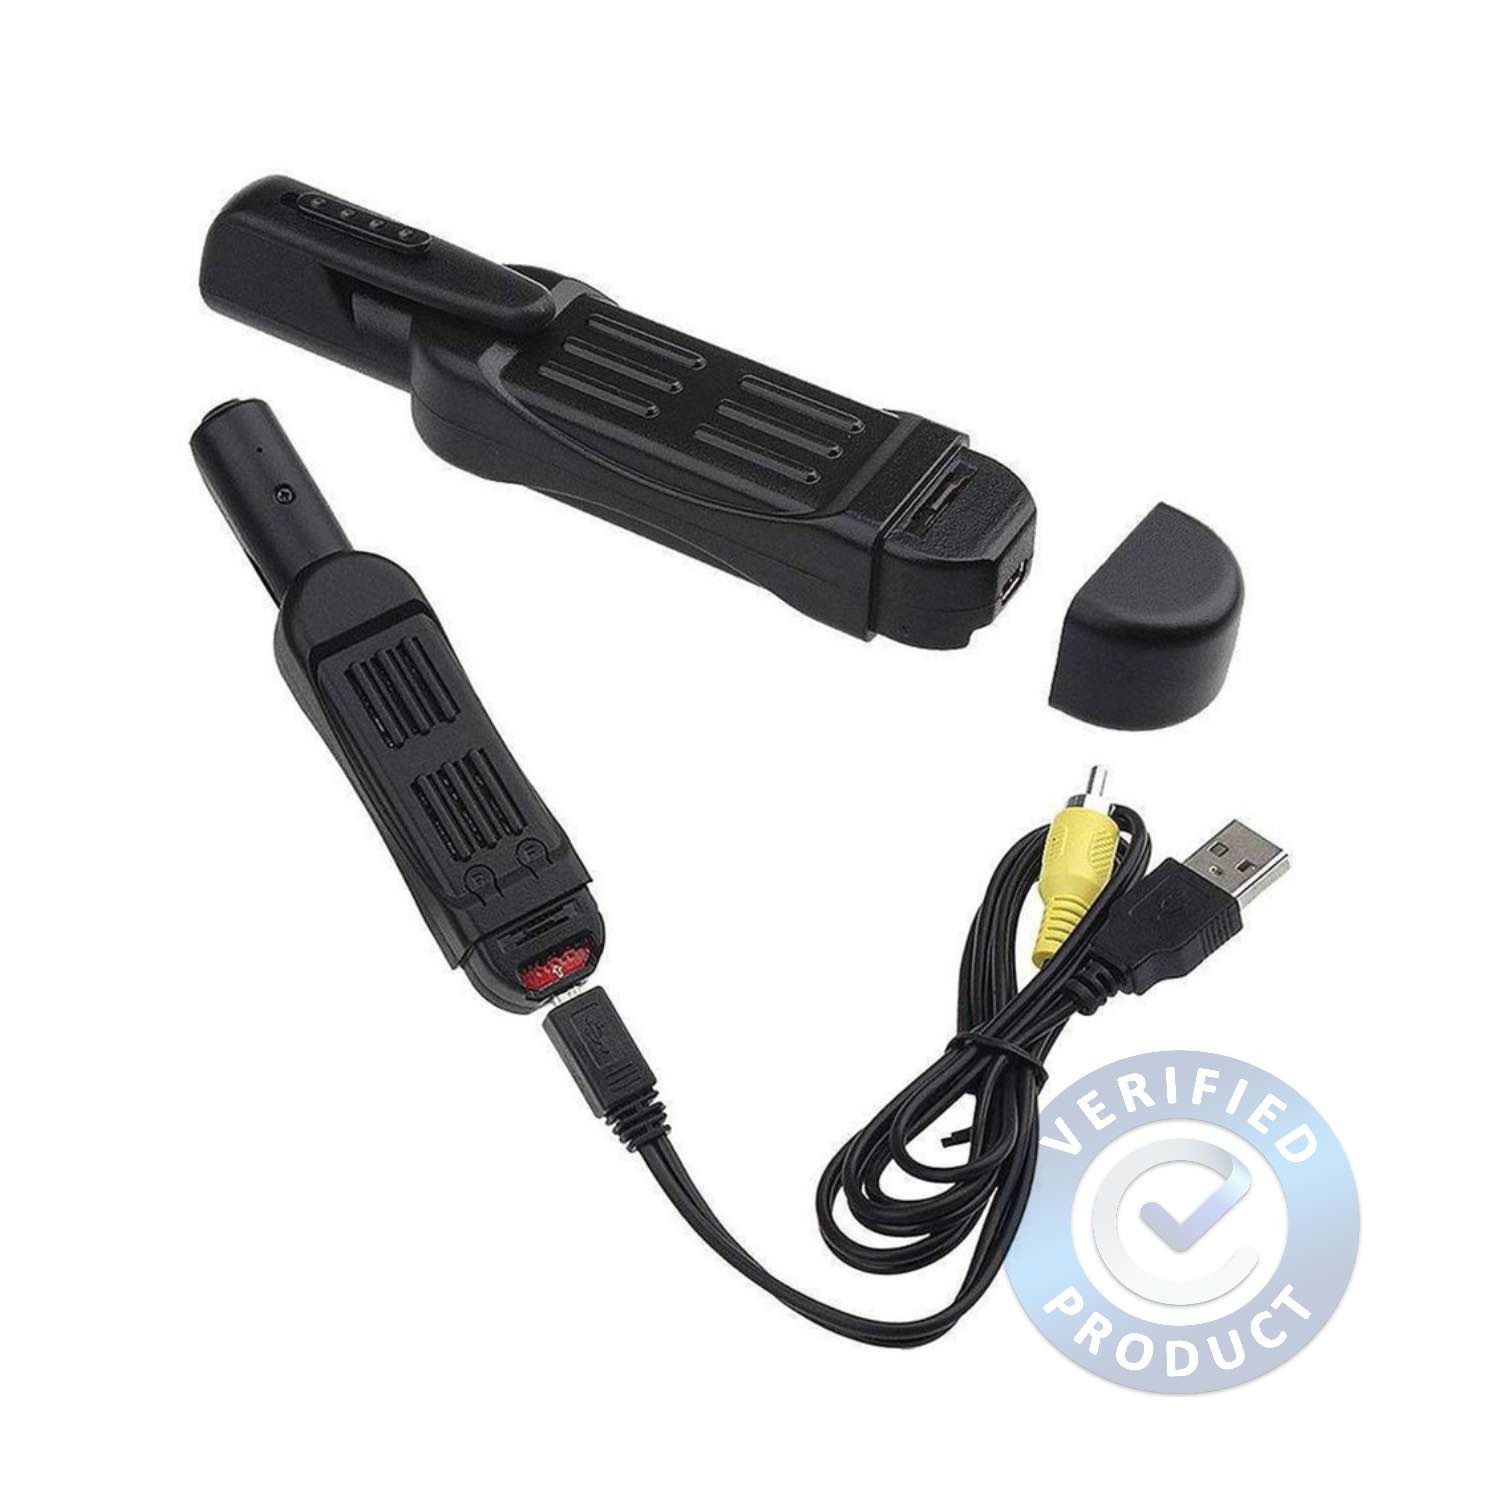 Wearable 4k Pen Spy Camera with Mini DVR